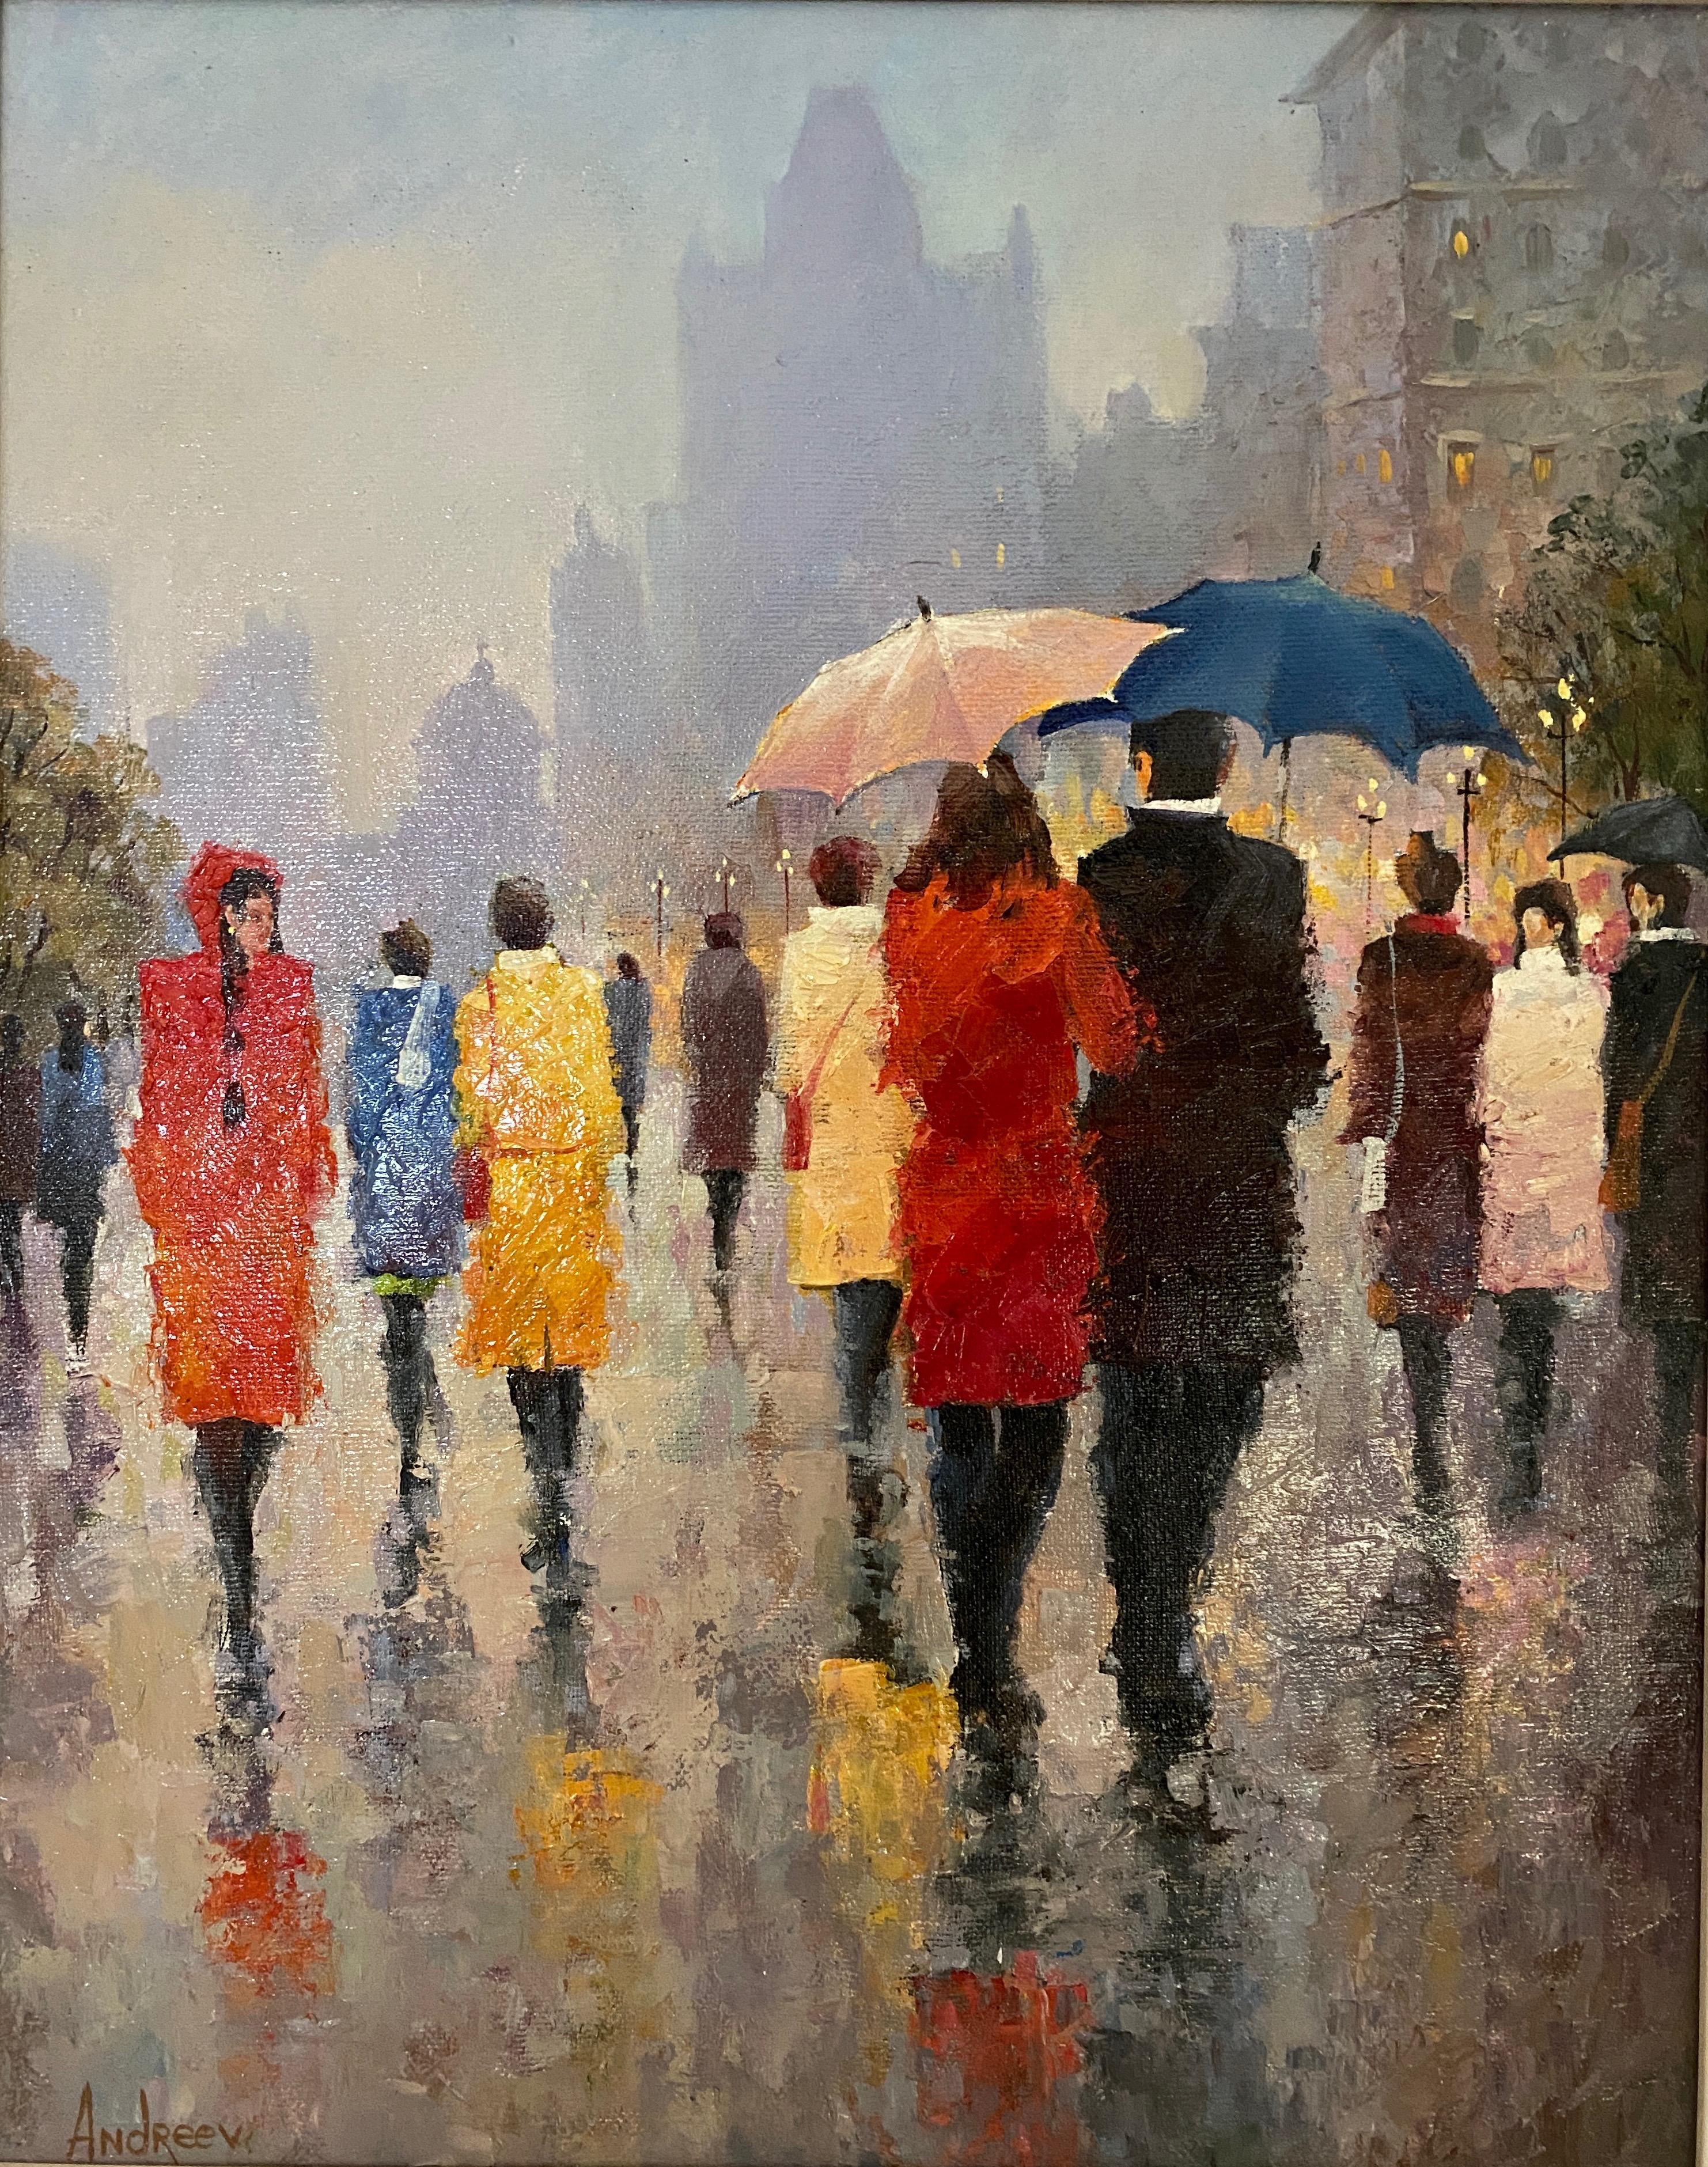 Rainy day. Oil on canvas. Impressionistic colorful street scene. 6